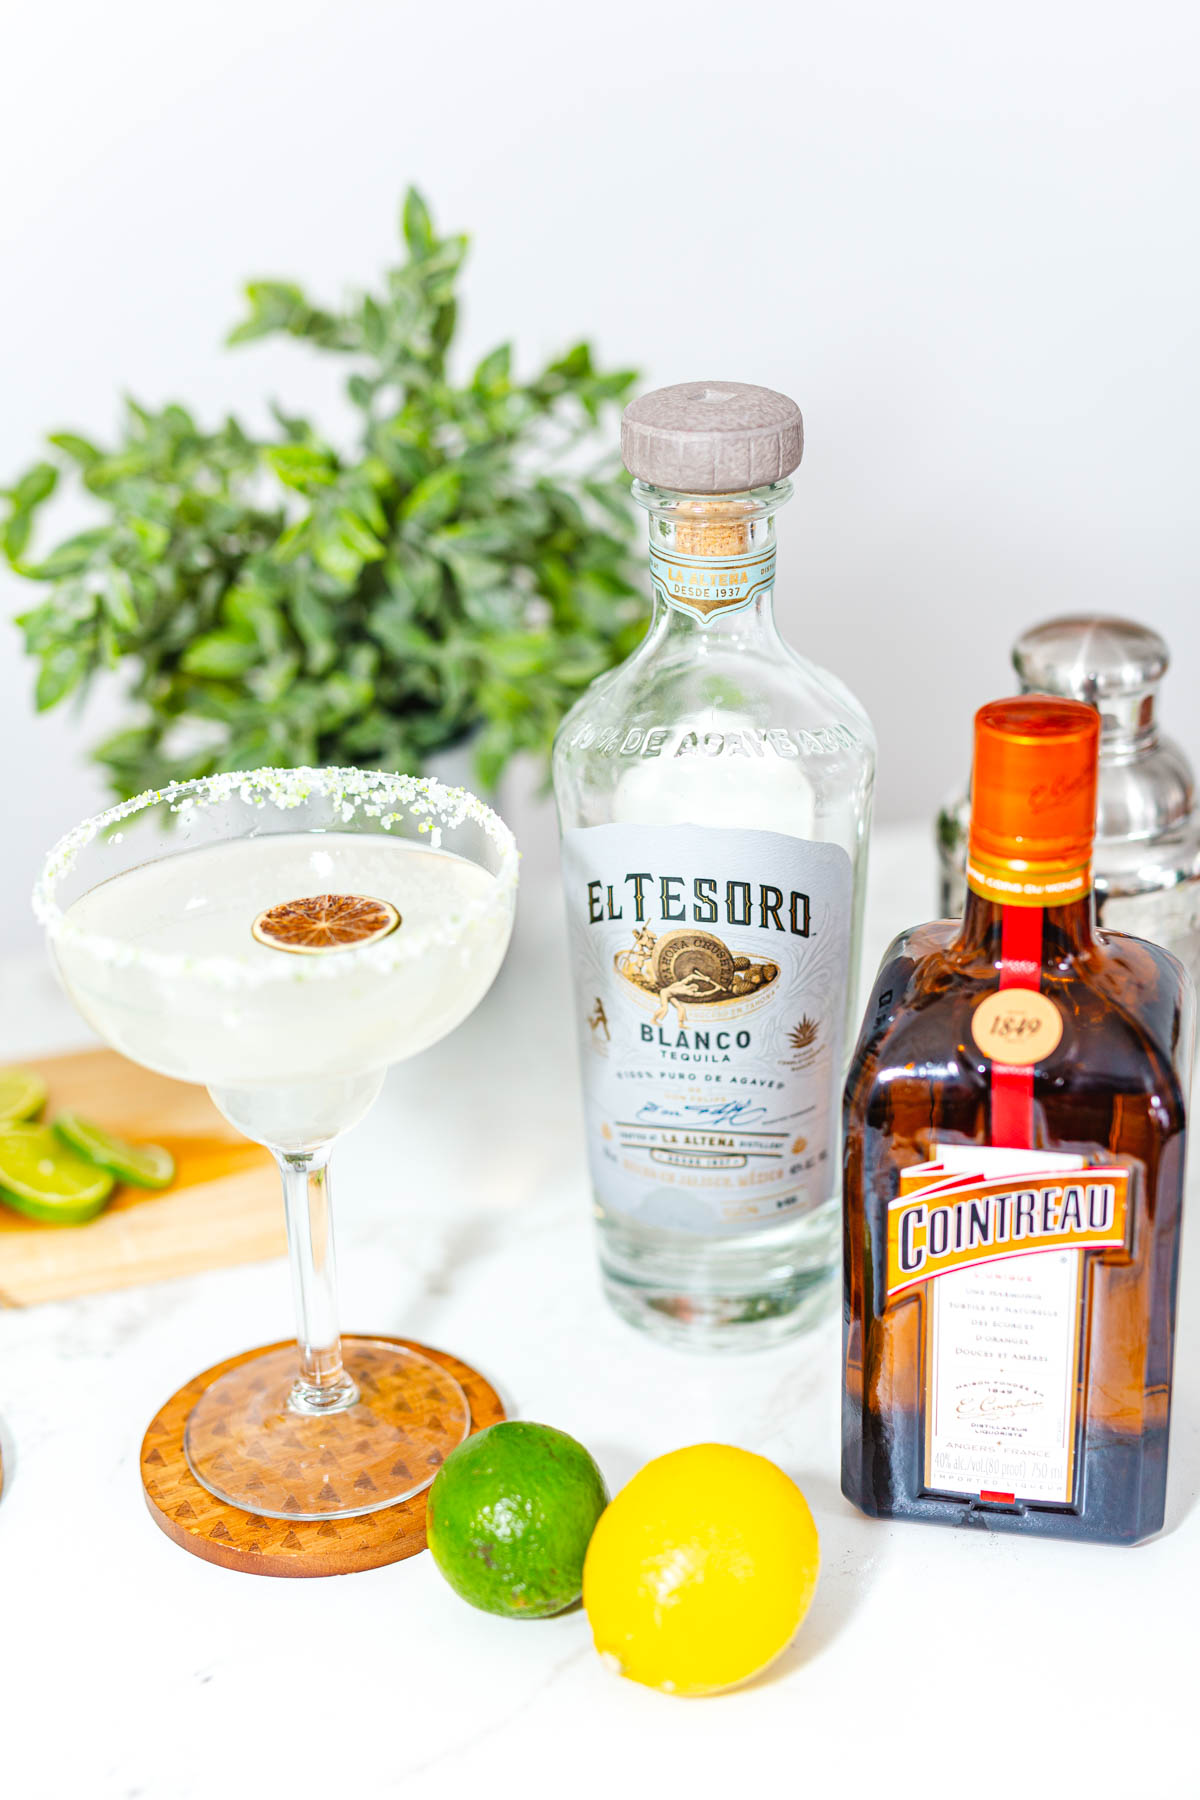 A margarita glass alongside lime, lemon, and bottles of El Tesoro Blanco Tequila and Cointreau.